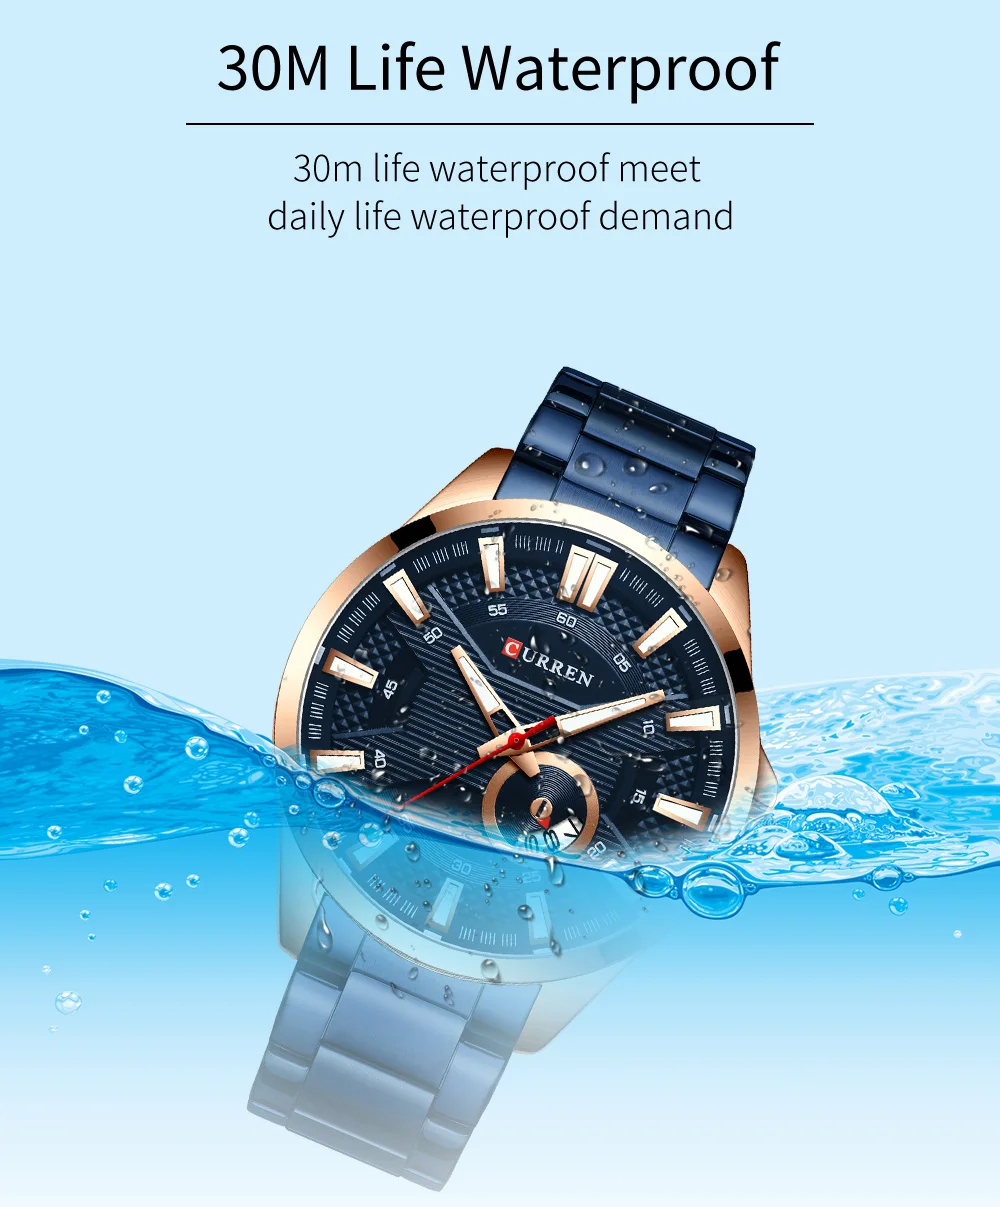 H1d46214260b84533a9cf38d446297245o New Stainless Steel Quartz Men's Watches Fashion CURREN Wrist Watch Causal Business Watch Top Luxury Brand Men Watch Male Clock